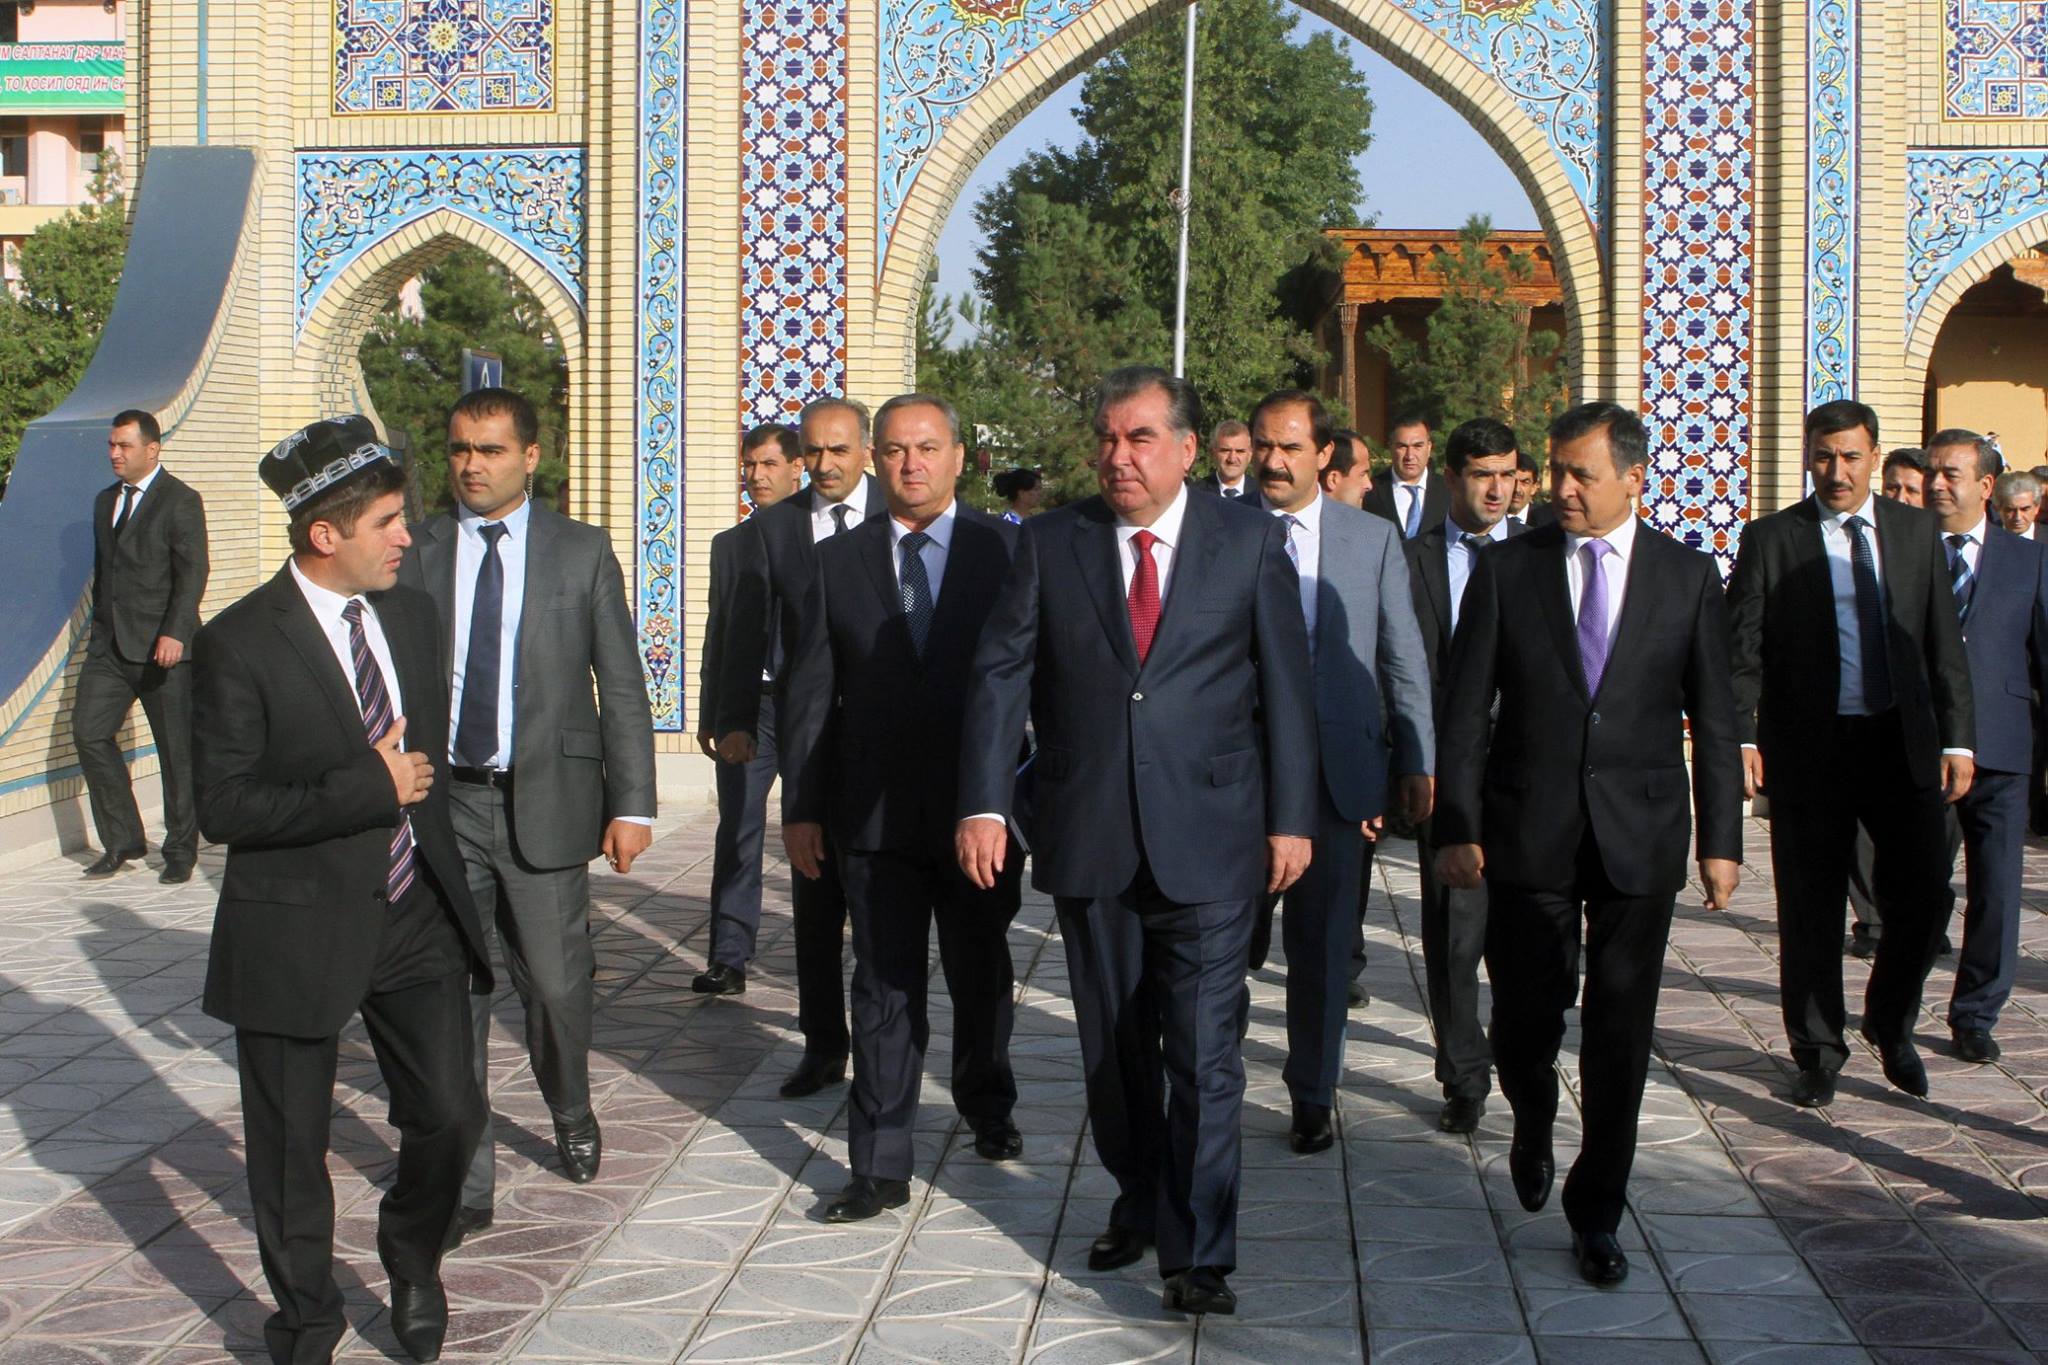 Точикистон хатлон. Эмомали Рахмон Хамадони. Охрана президента Таджикистана Эмомали Рахмон. Эмомали Рахмон в Куляб. Резиденция президента Таджикистана город Куляб.